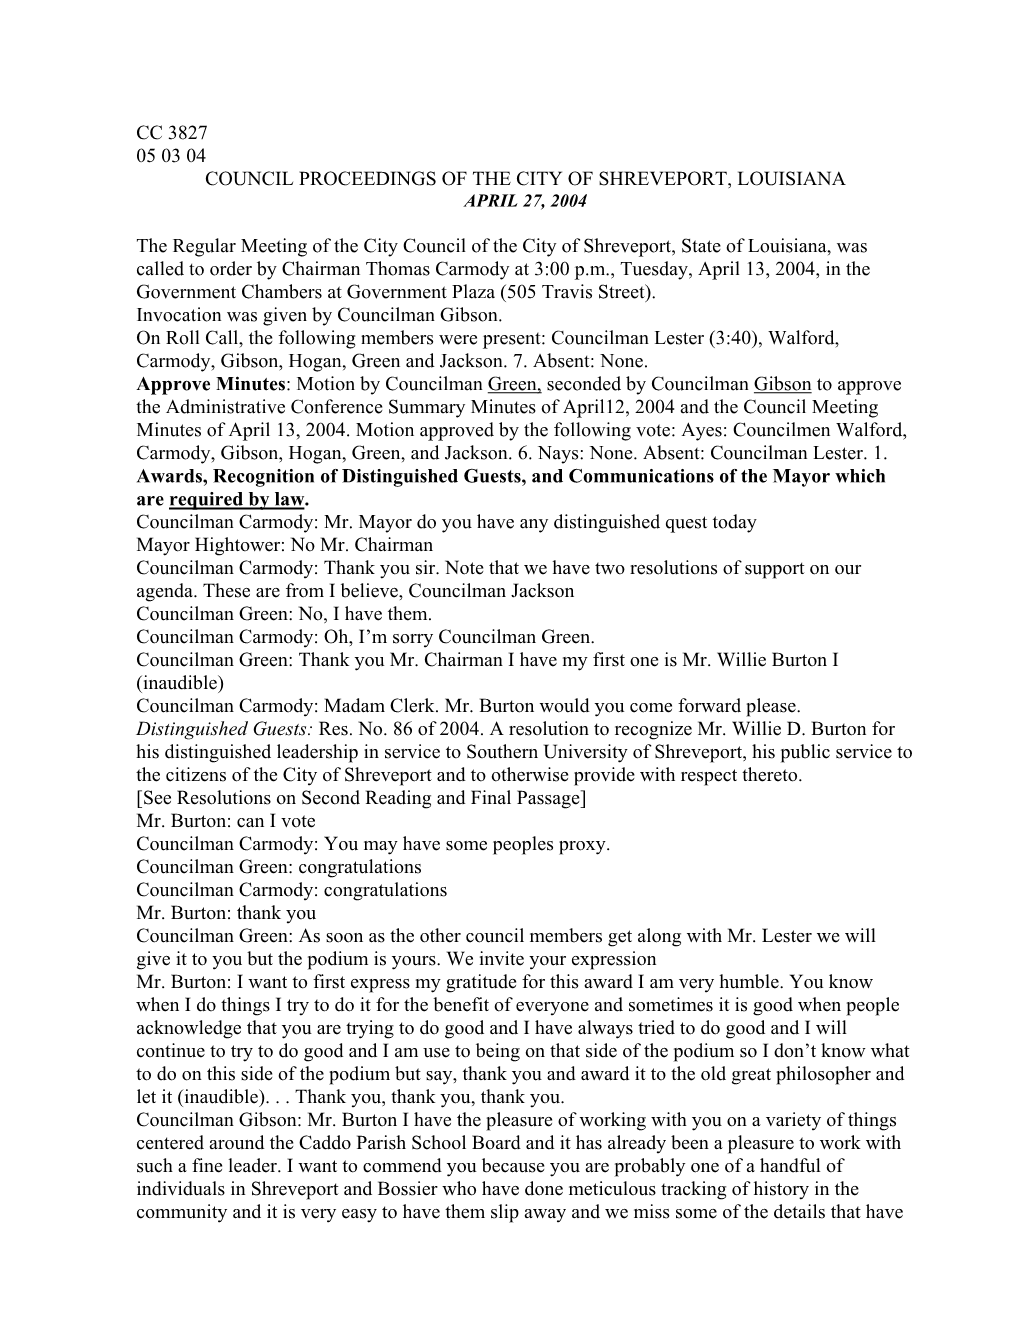 Cc 3827 05 03 04 Council Proceedings of the City of Shreveport, Louisiana April 27, 2004